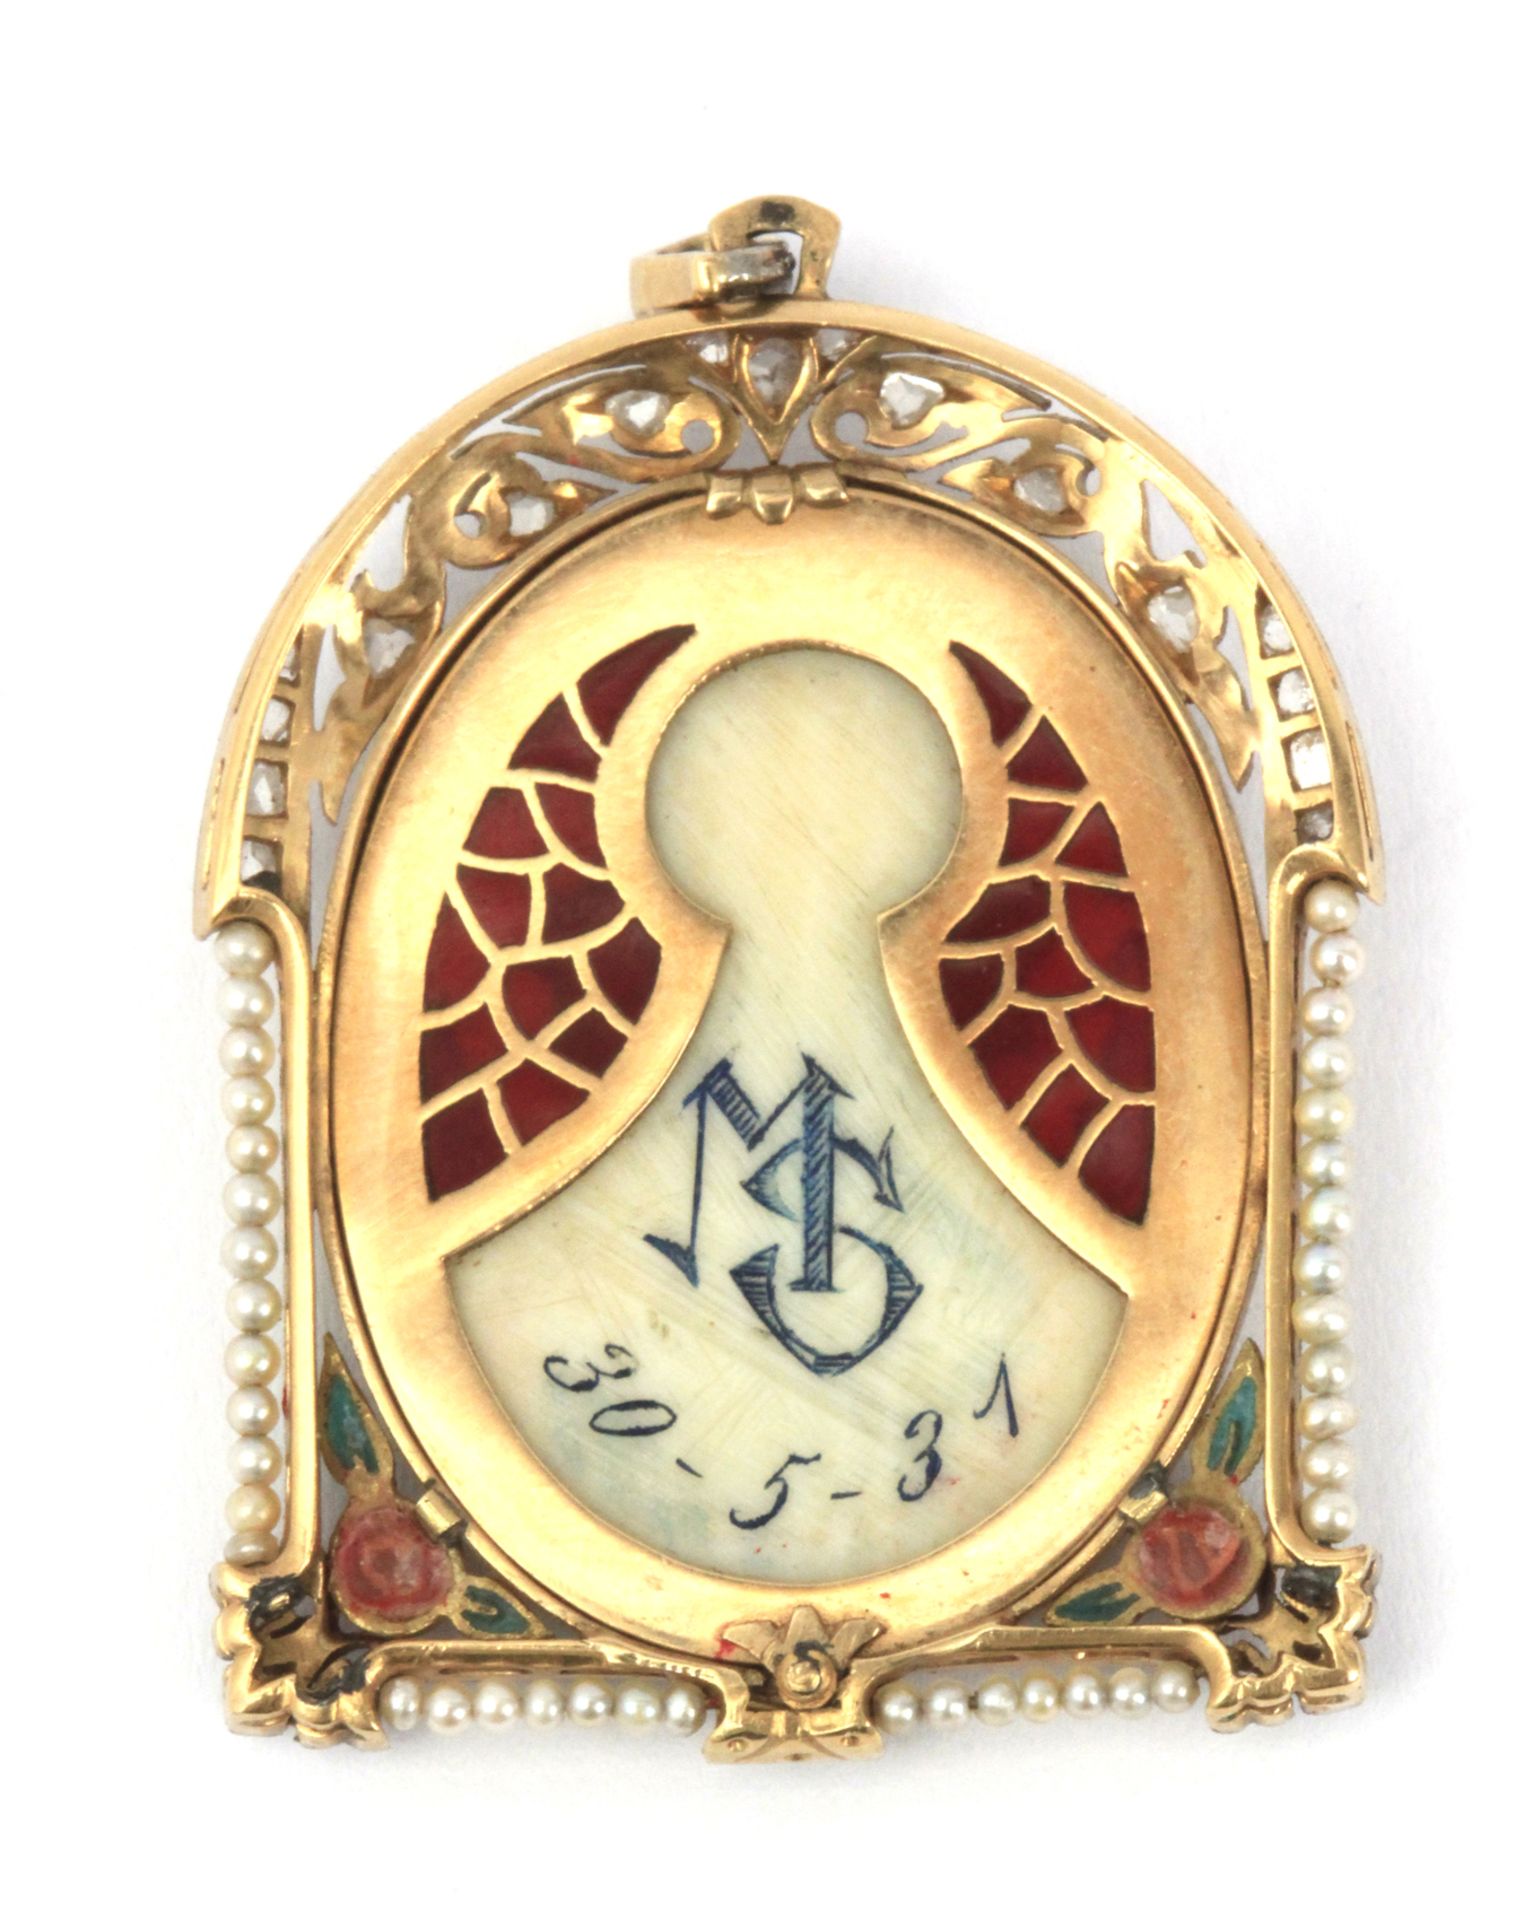 An Art-Déco devotional medal circa 1930 - Image 2 of 2